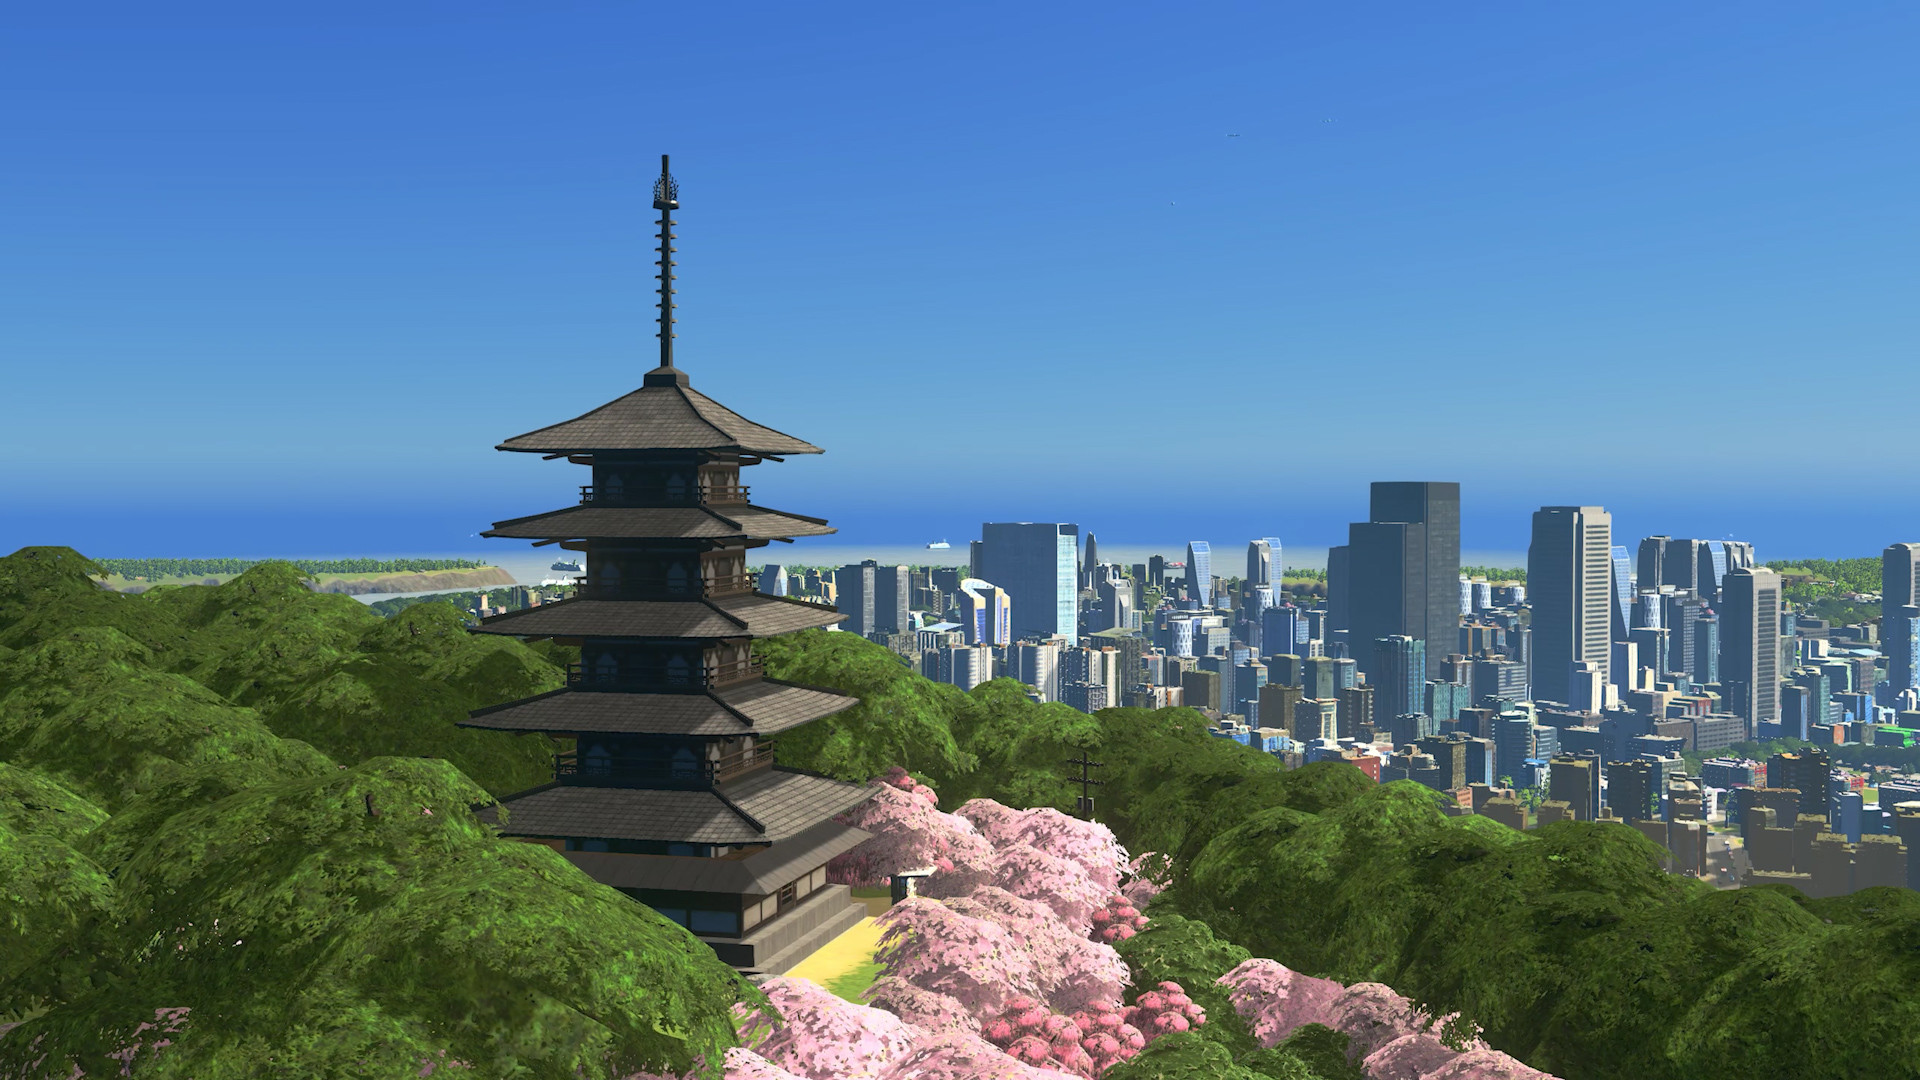 Cities: Skylines Content Creator Modern Japan -- RU